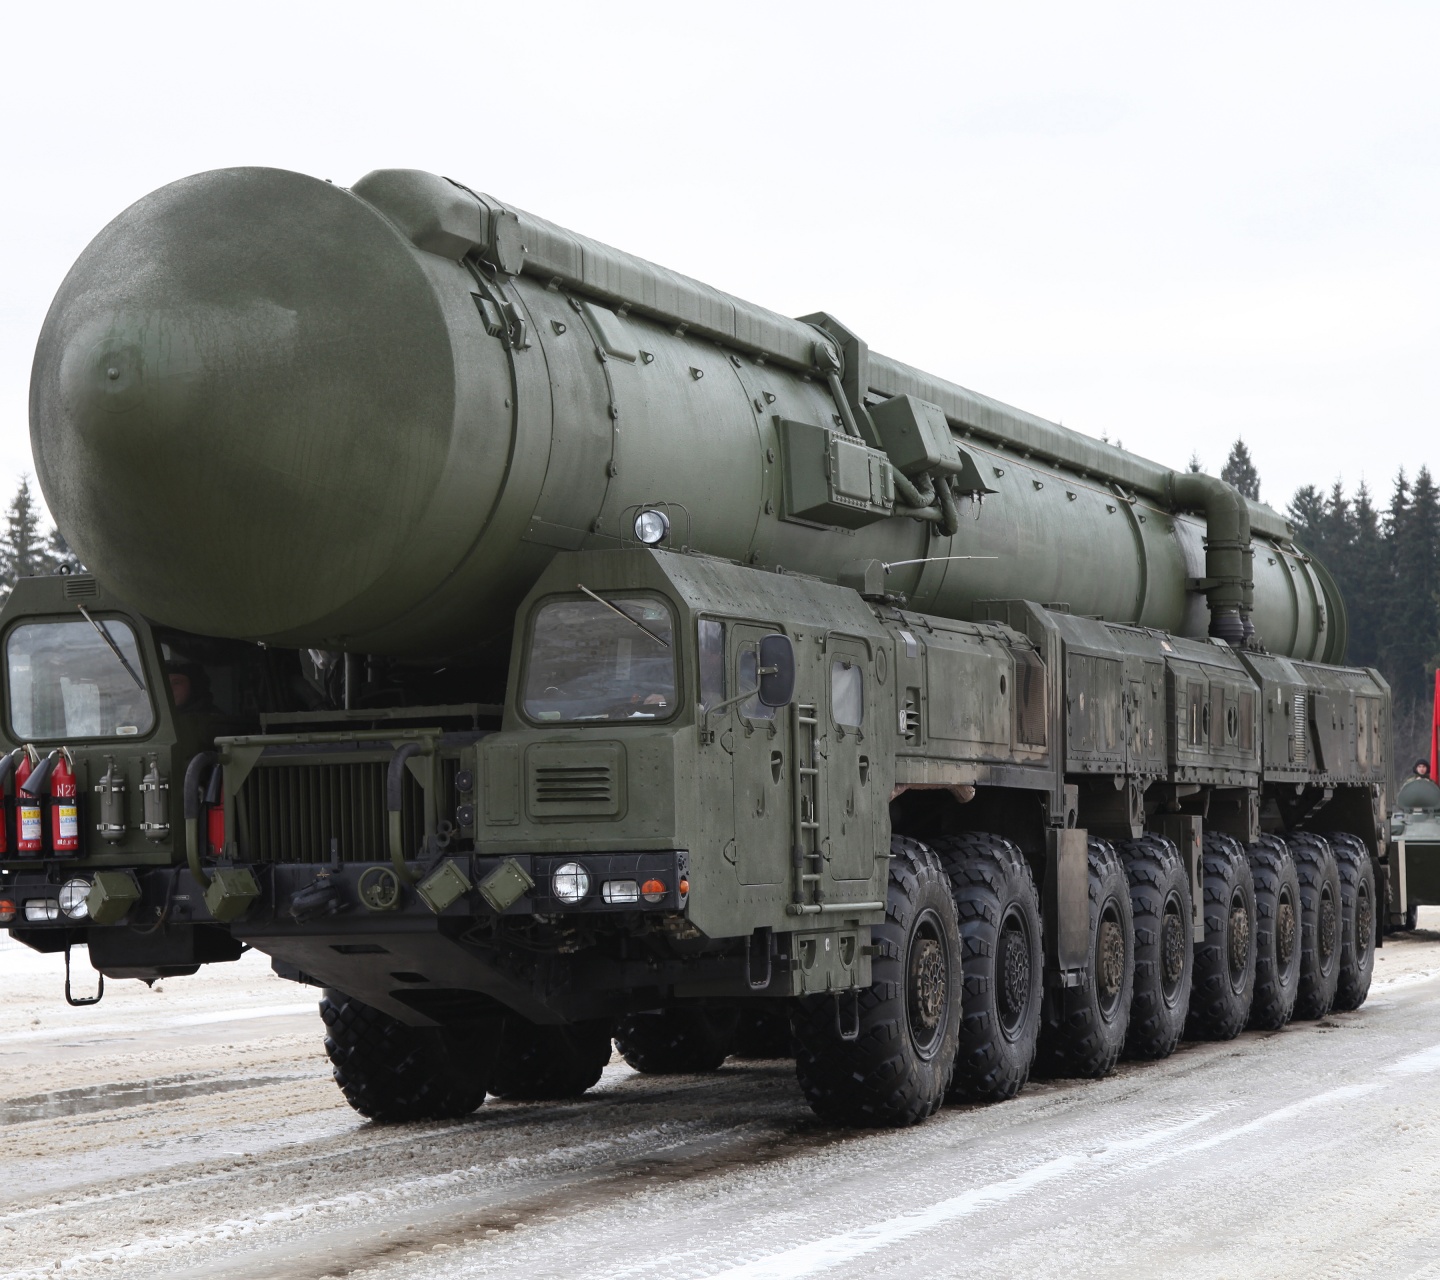 Topol-M - Russian Ballistic Missile